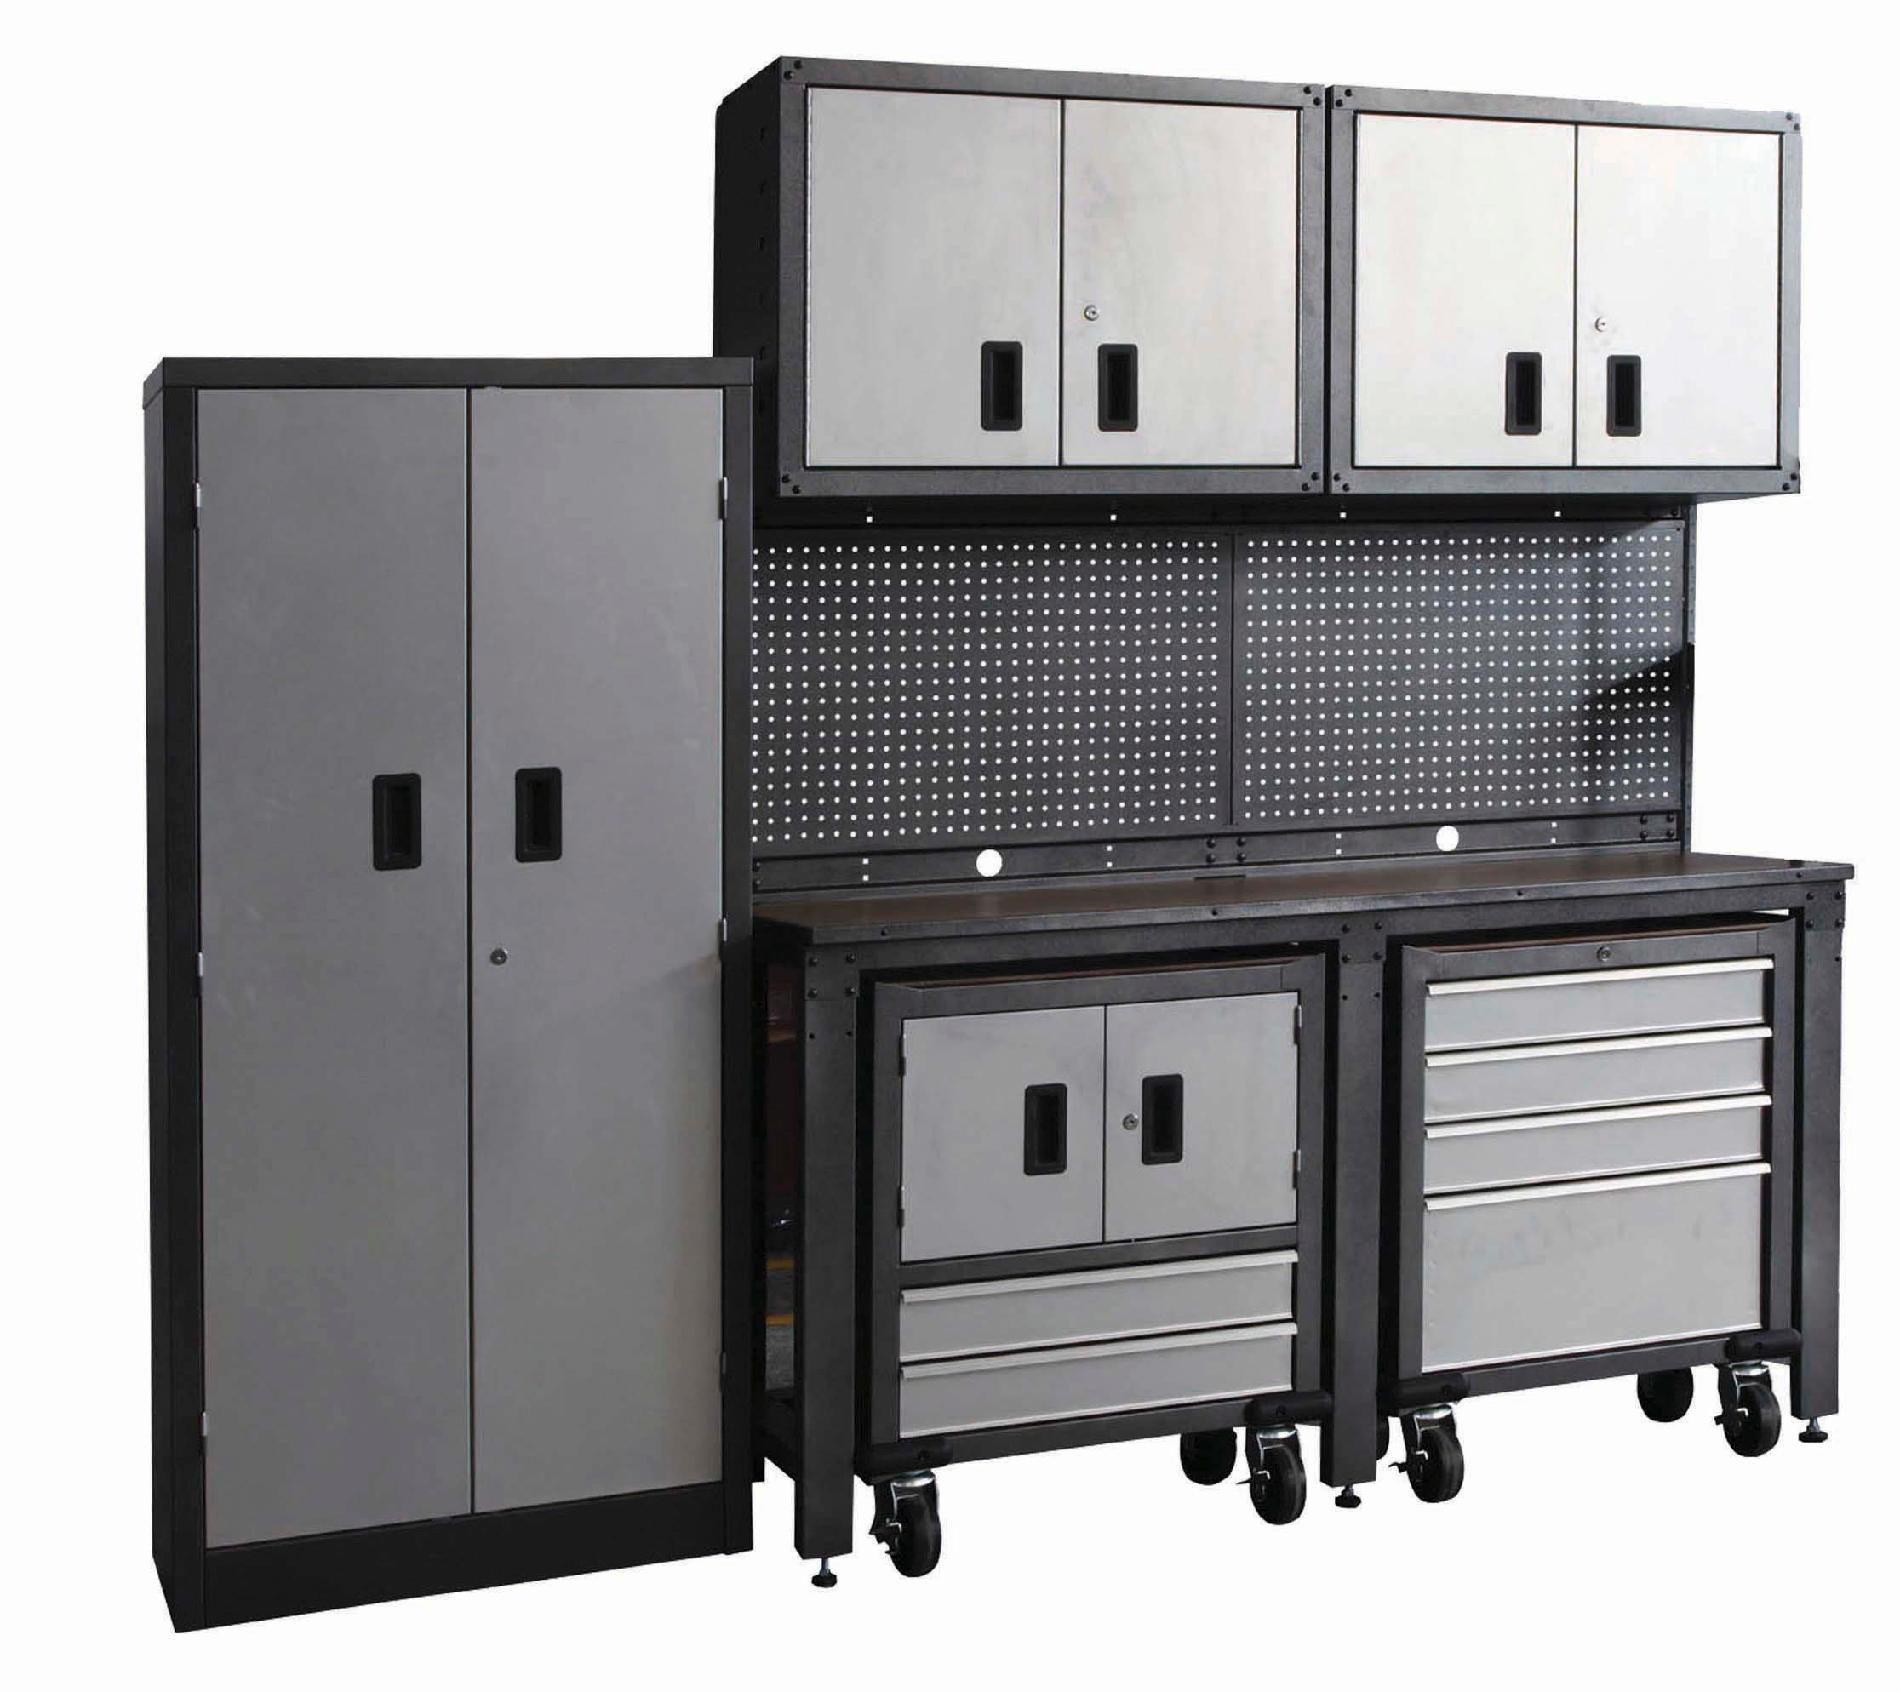 Garage Organizing Lowes
 International 8 piece Garage Modular Storage System PLUS